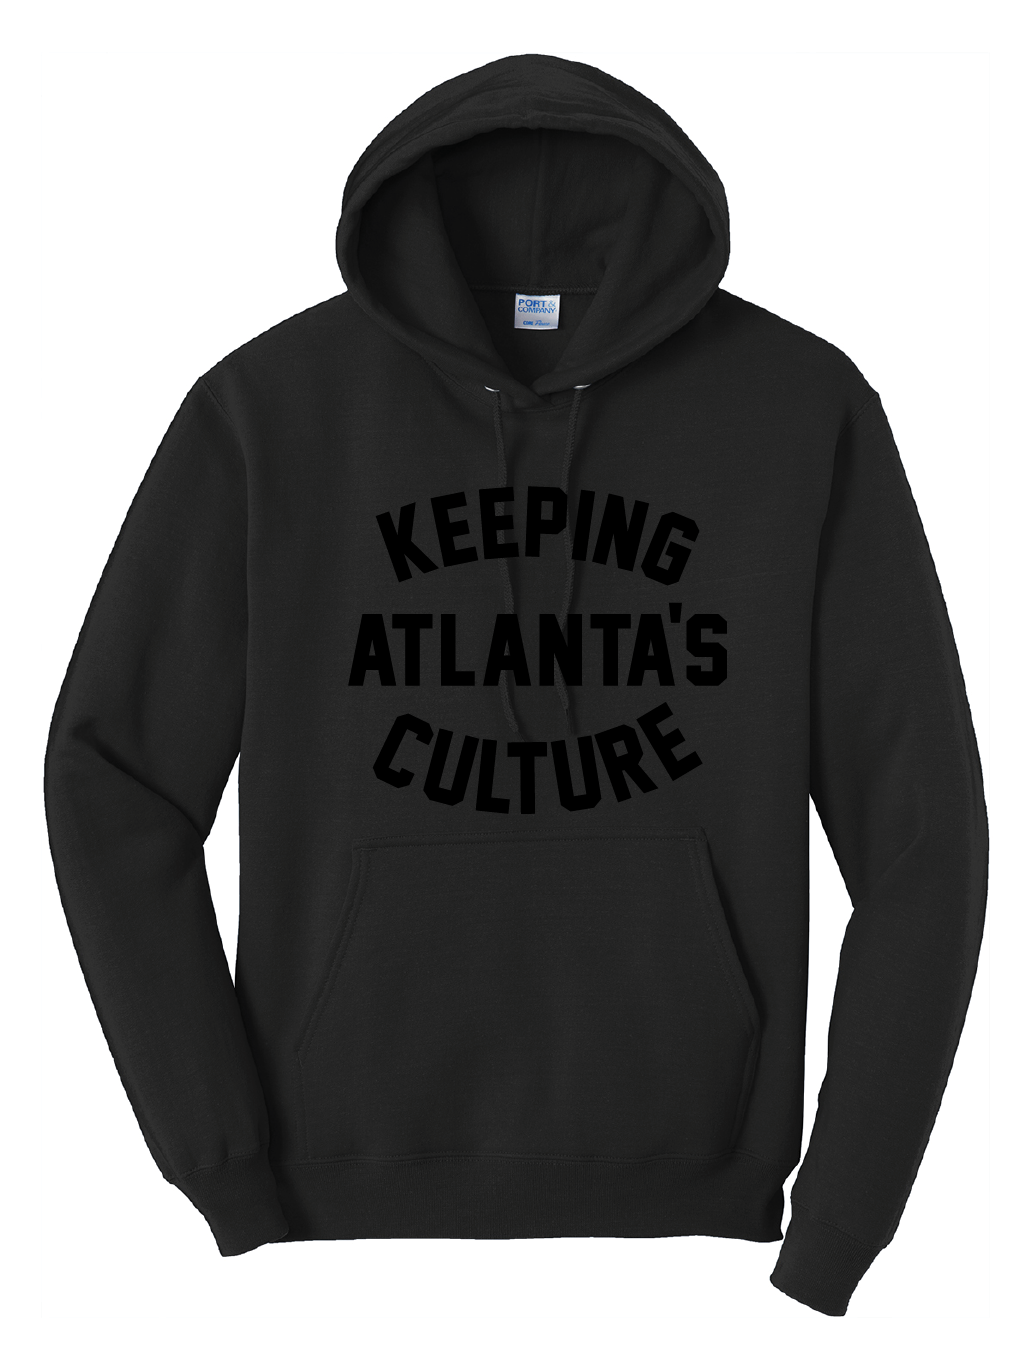 KAC Culture Hooded Sweatshirt